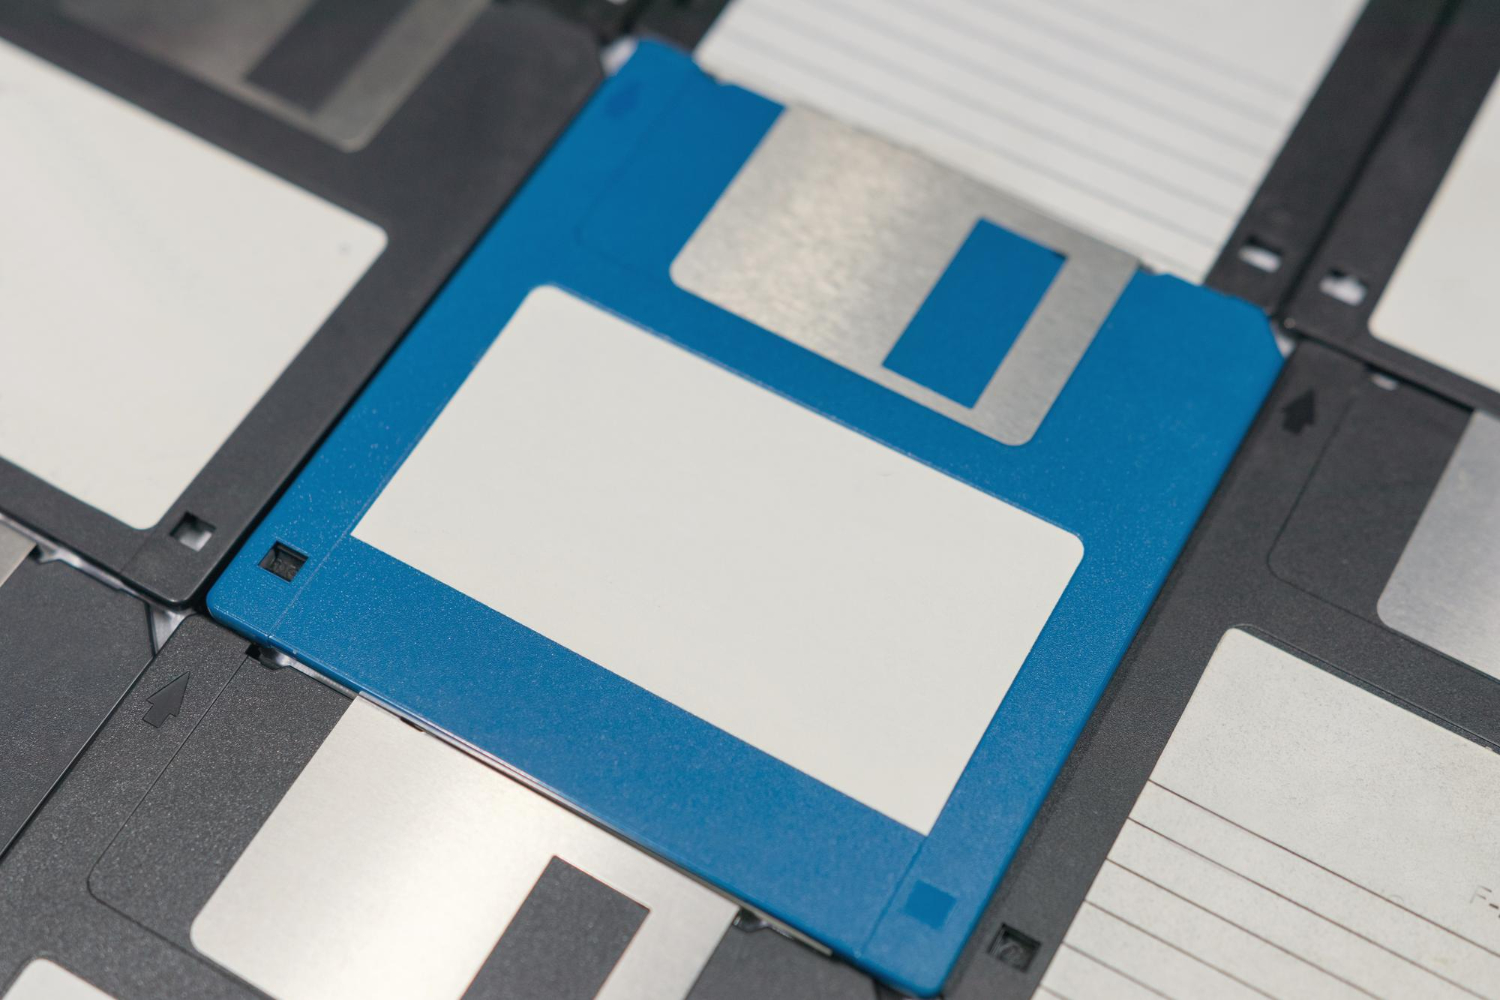 floppy disks magnetic computer data storage amiga 500